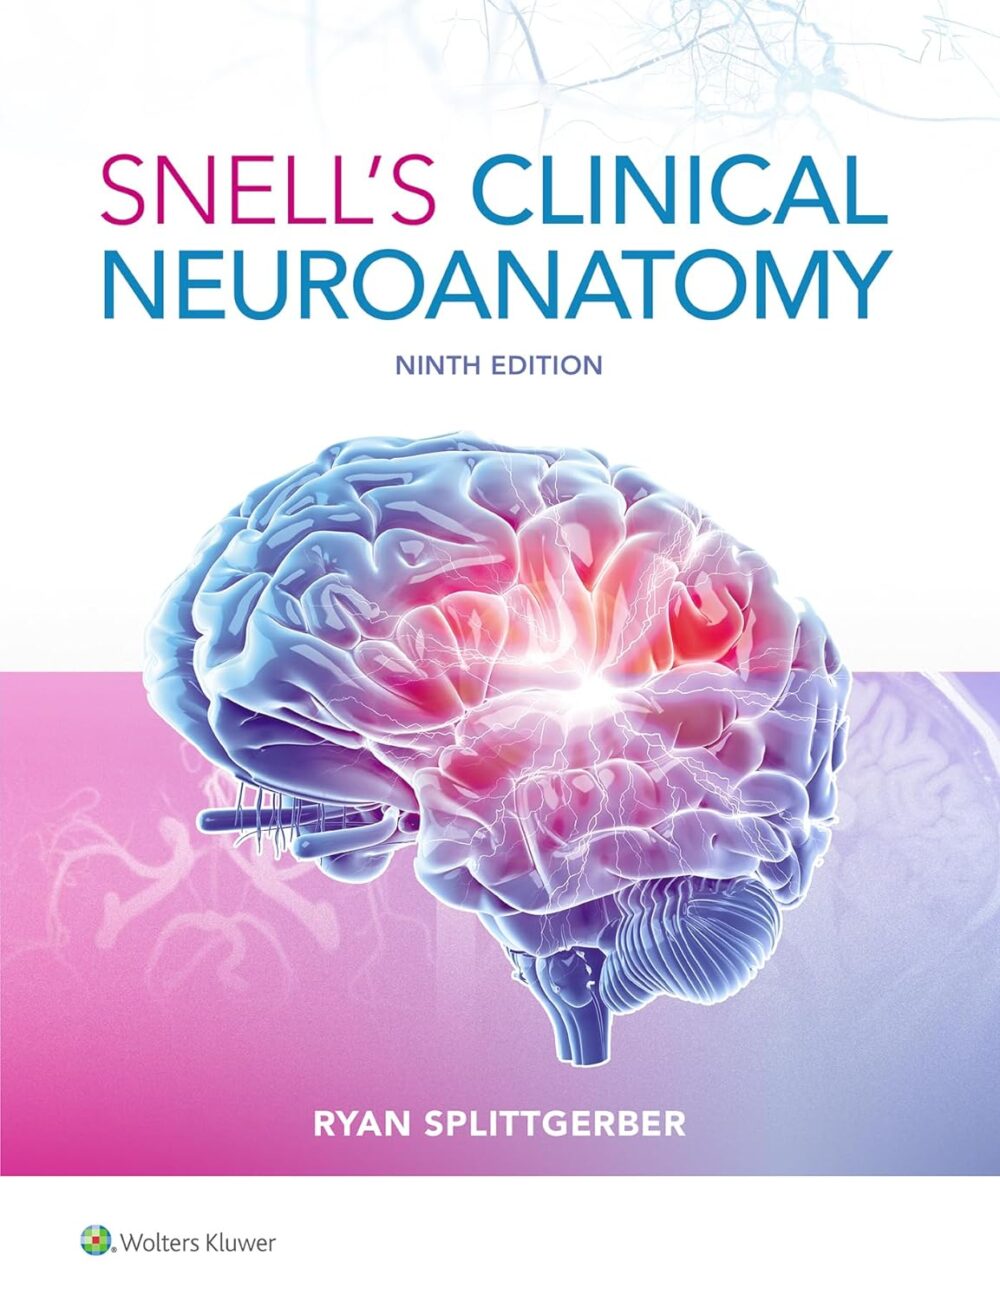 Snell's klinische neuroanatomie negende editie 9e druk